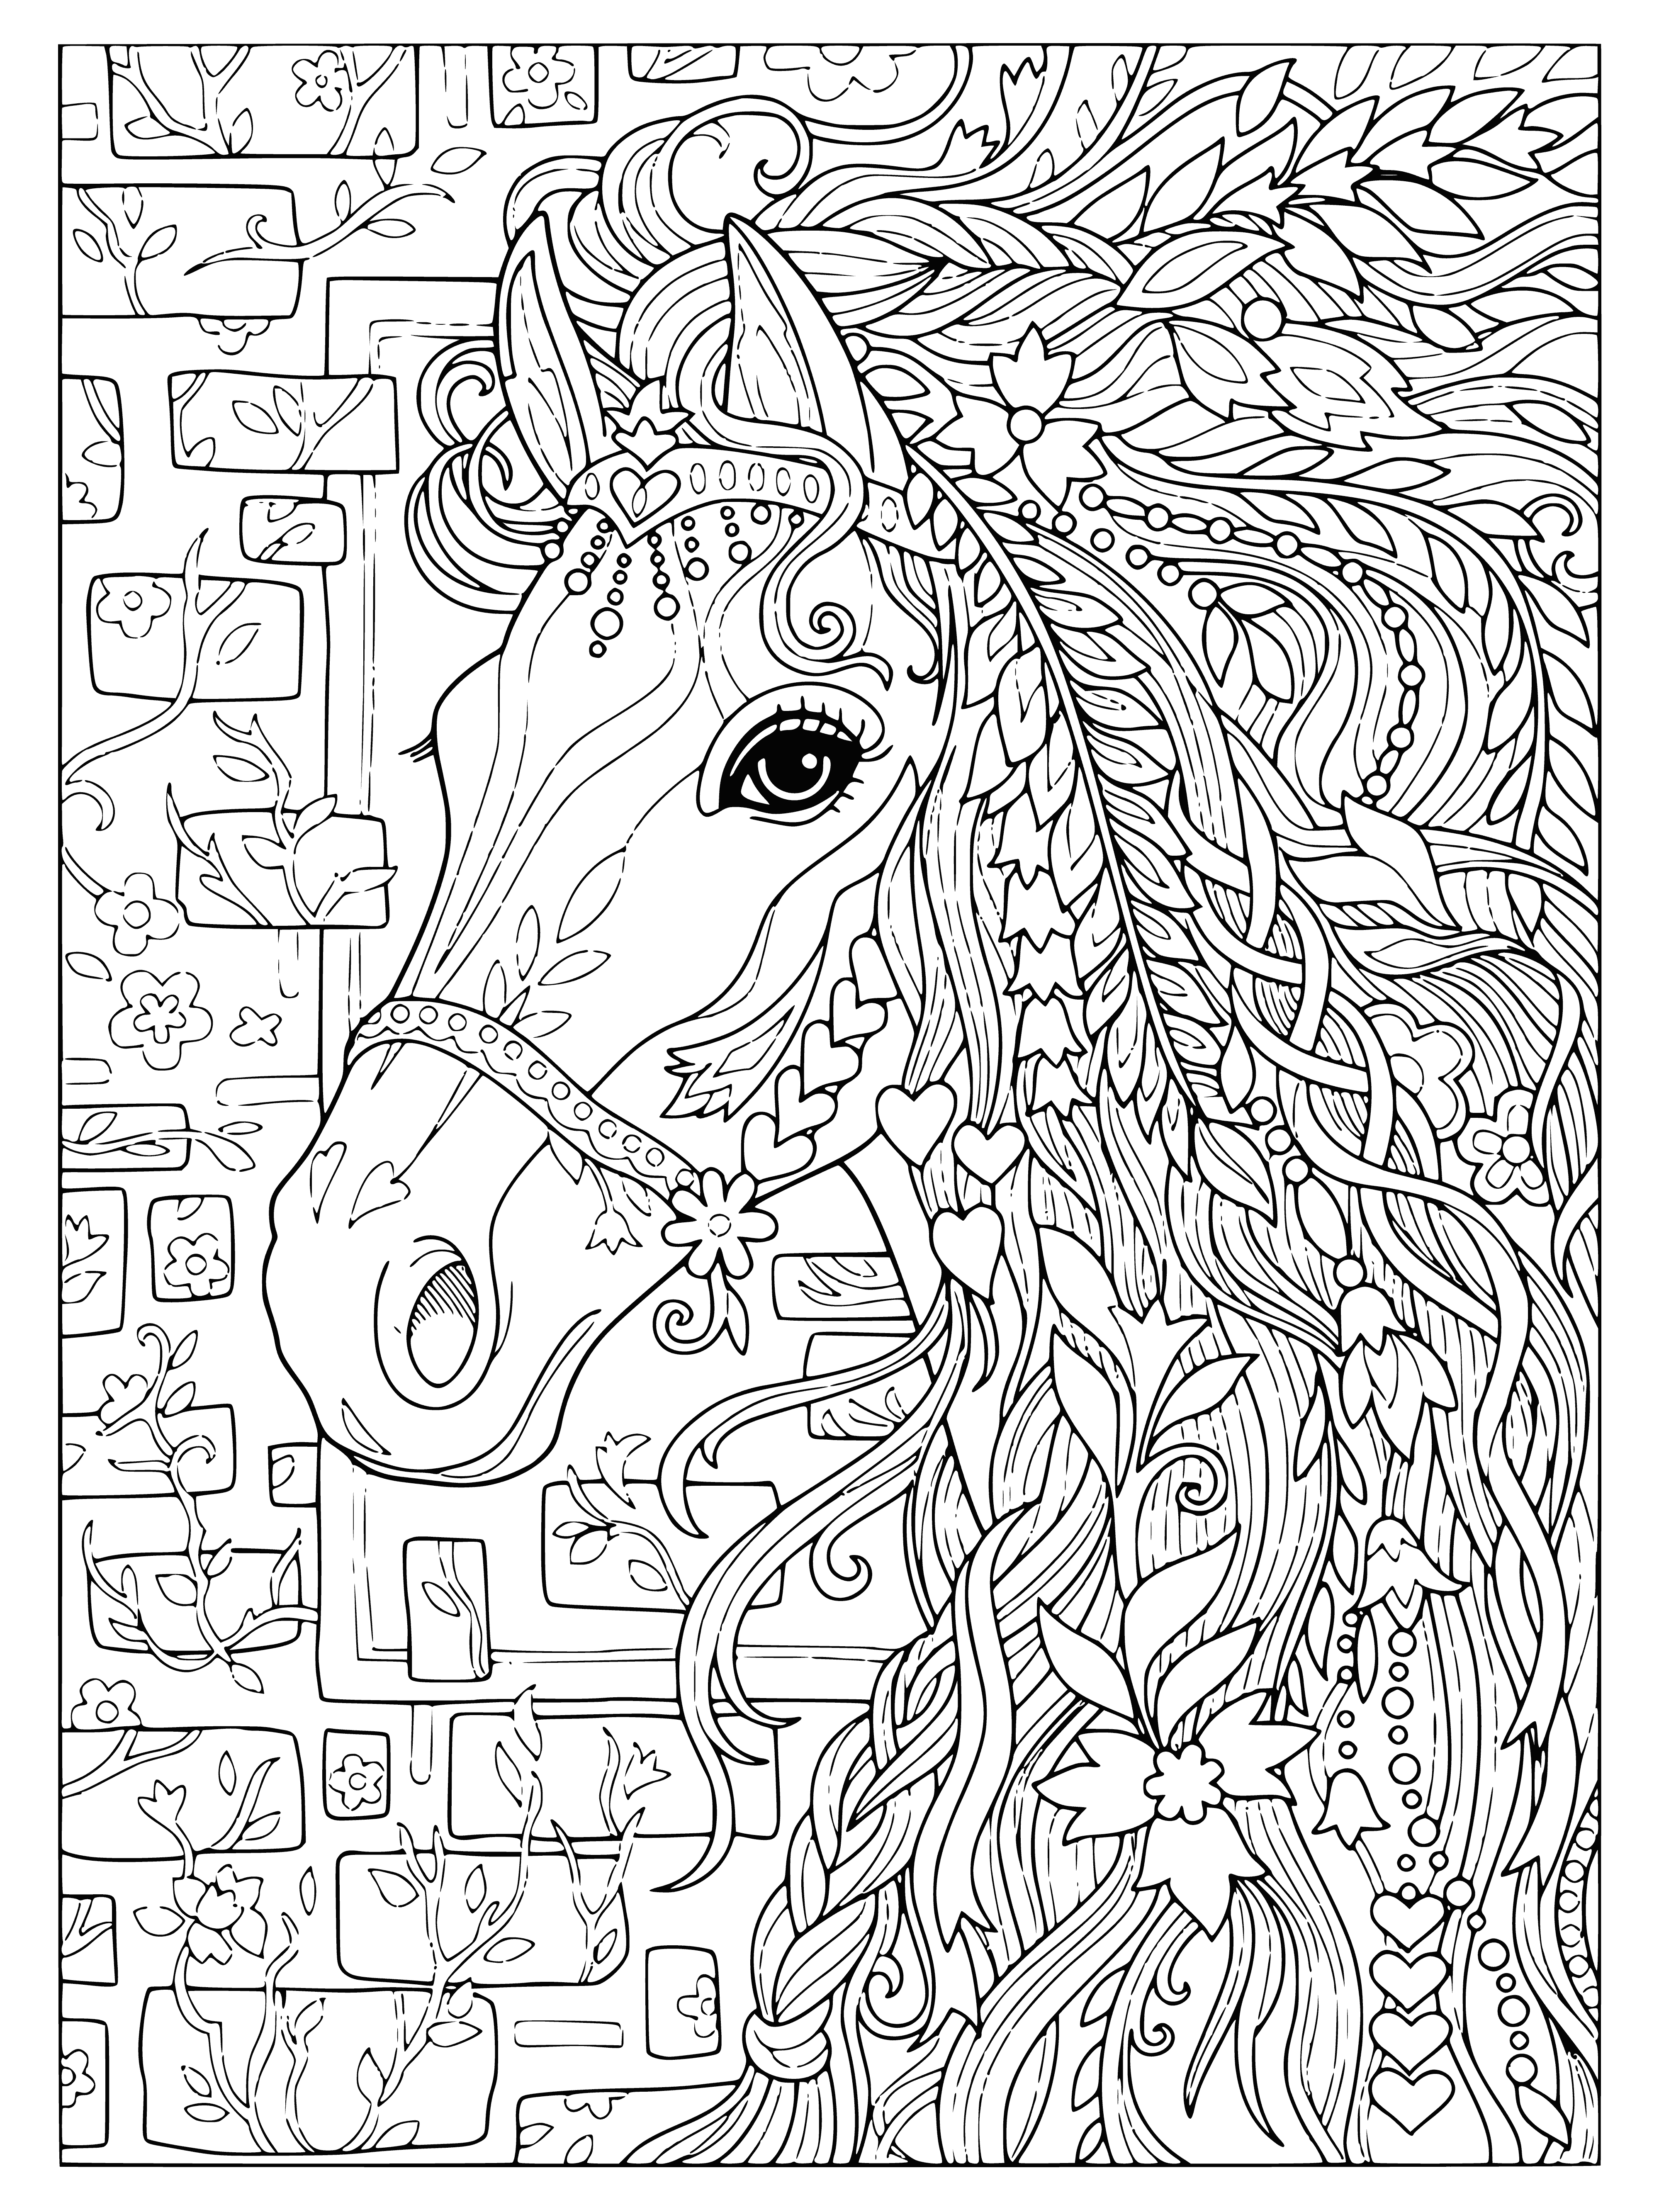 Koń kolorowanka